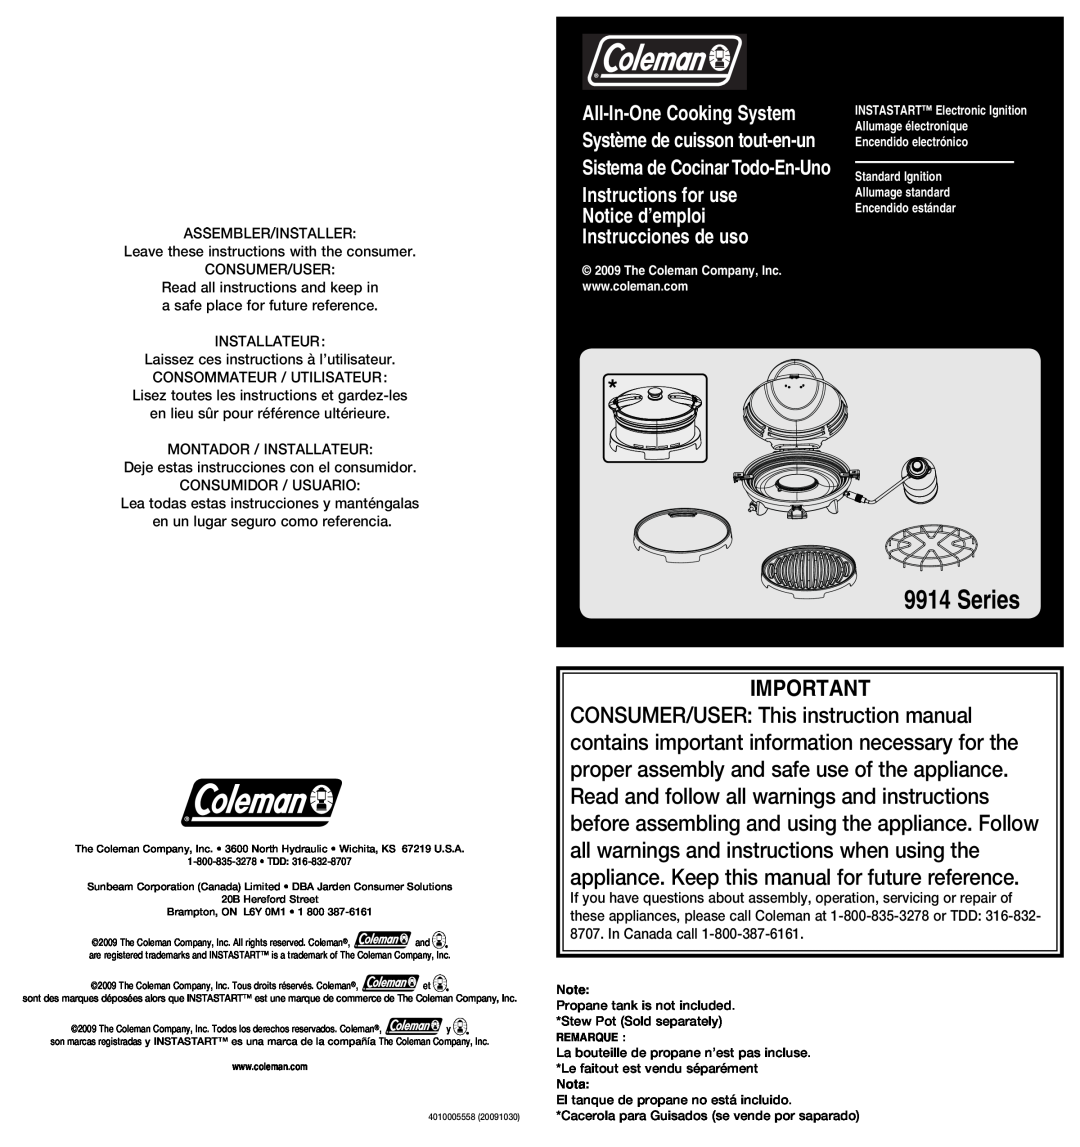 Coleman 9914 instruction manual Series, Instructions for use Notice d’emploi Instrucciones de uso, Consumer/User, Nota 